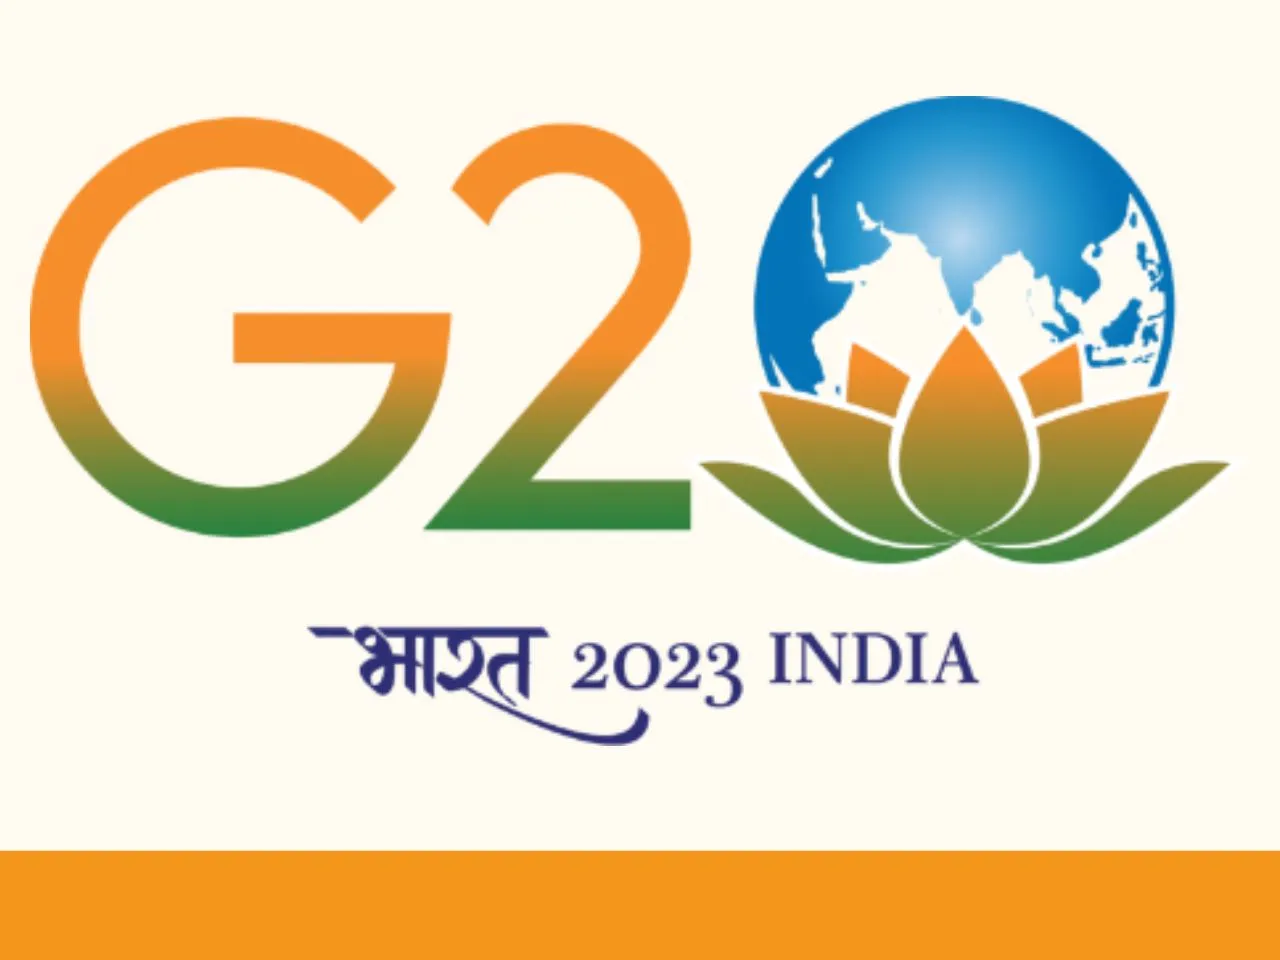 G20 Startup20 meeting in Hyderabad